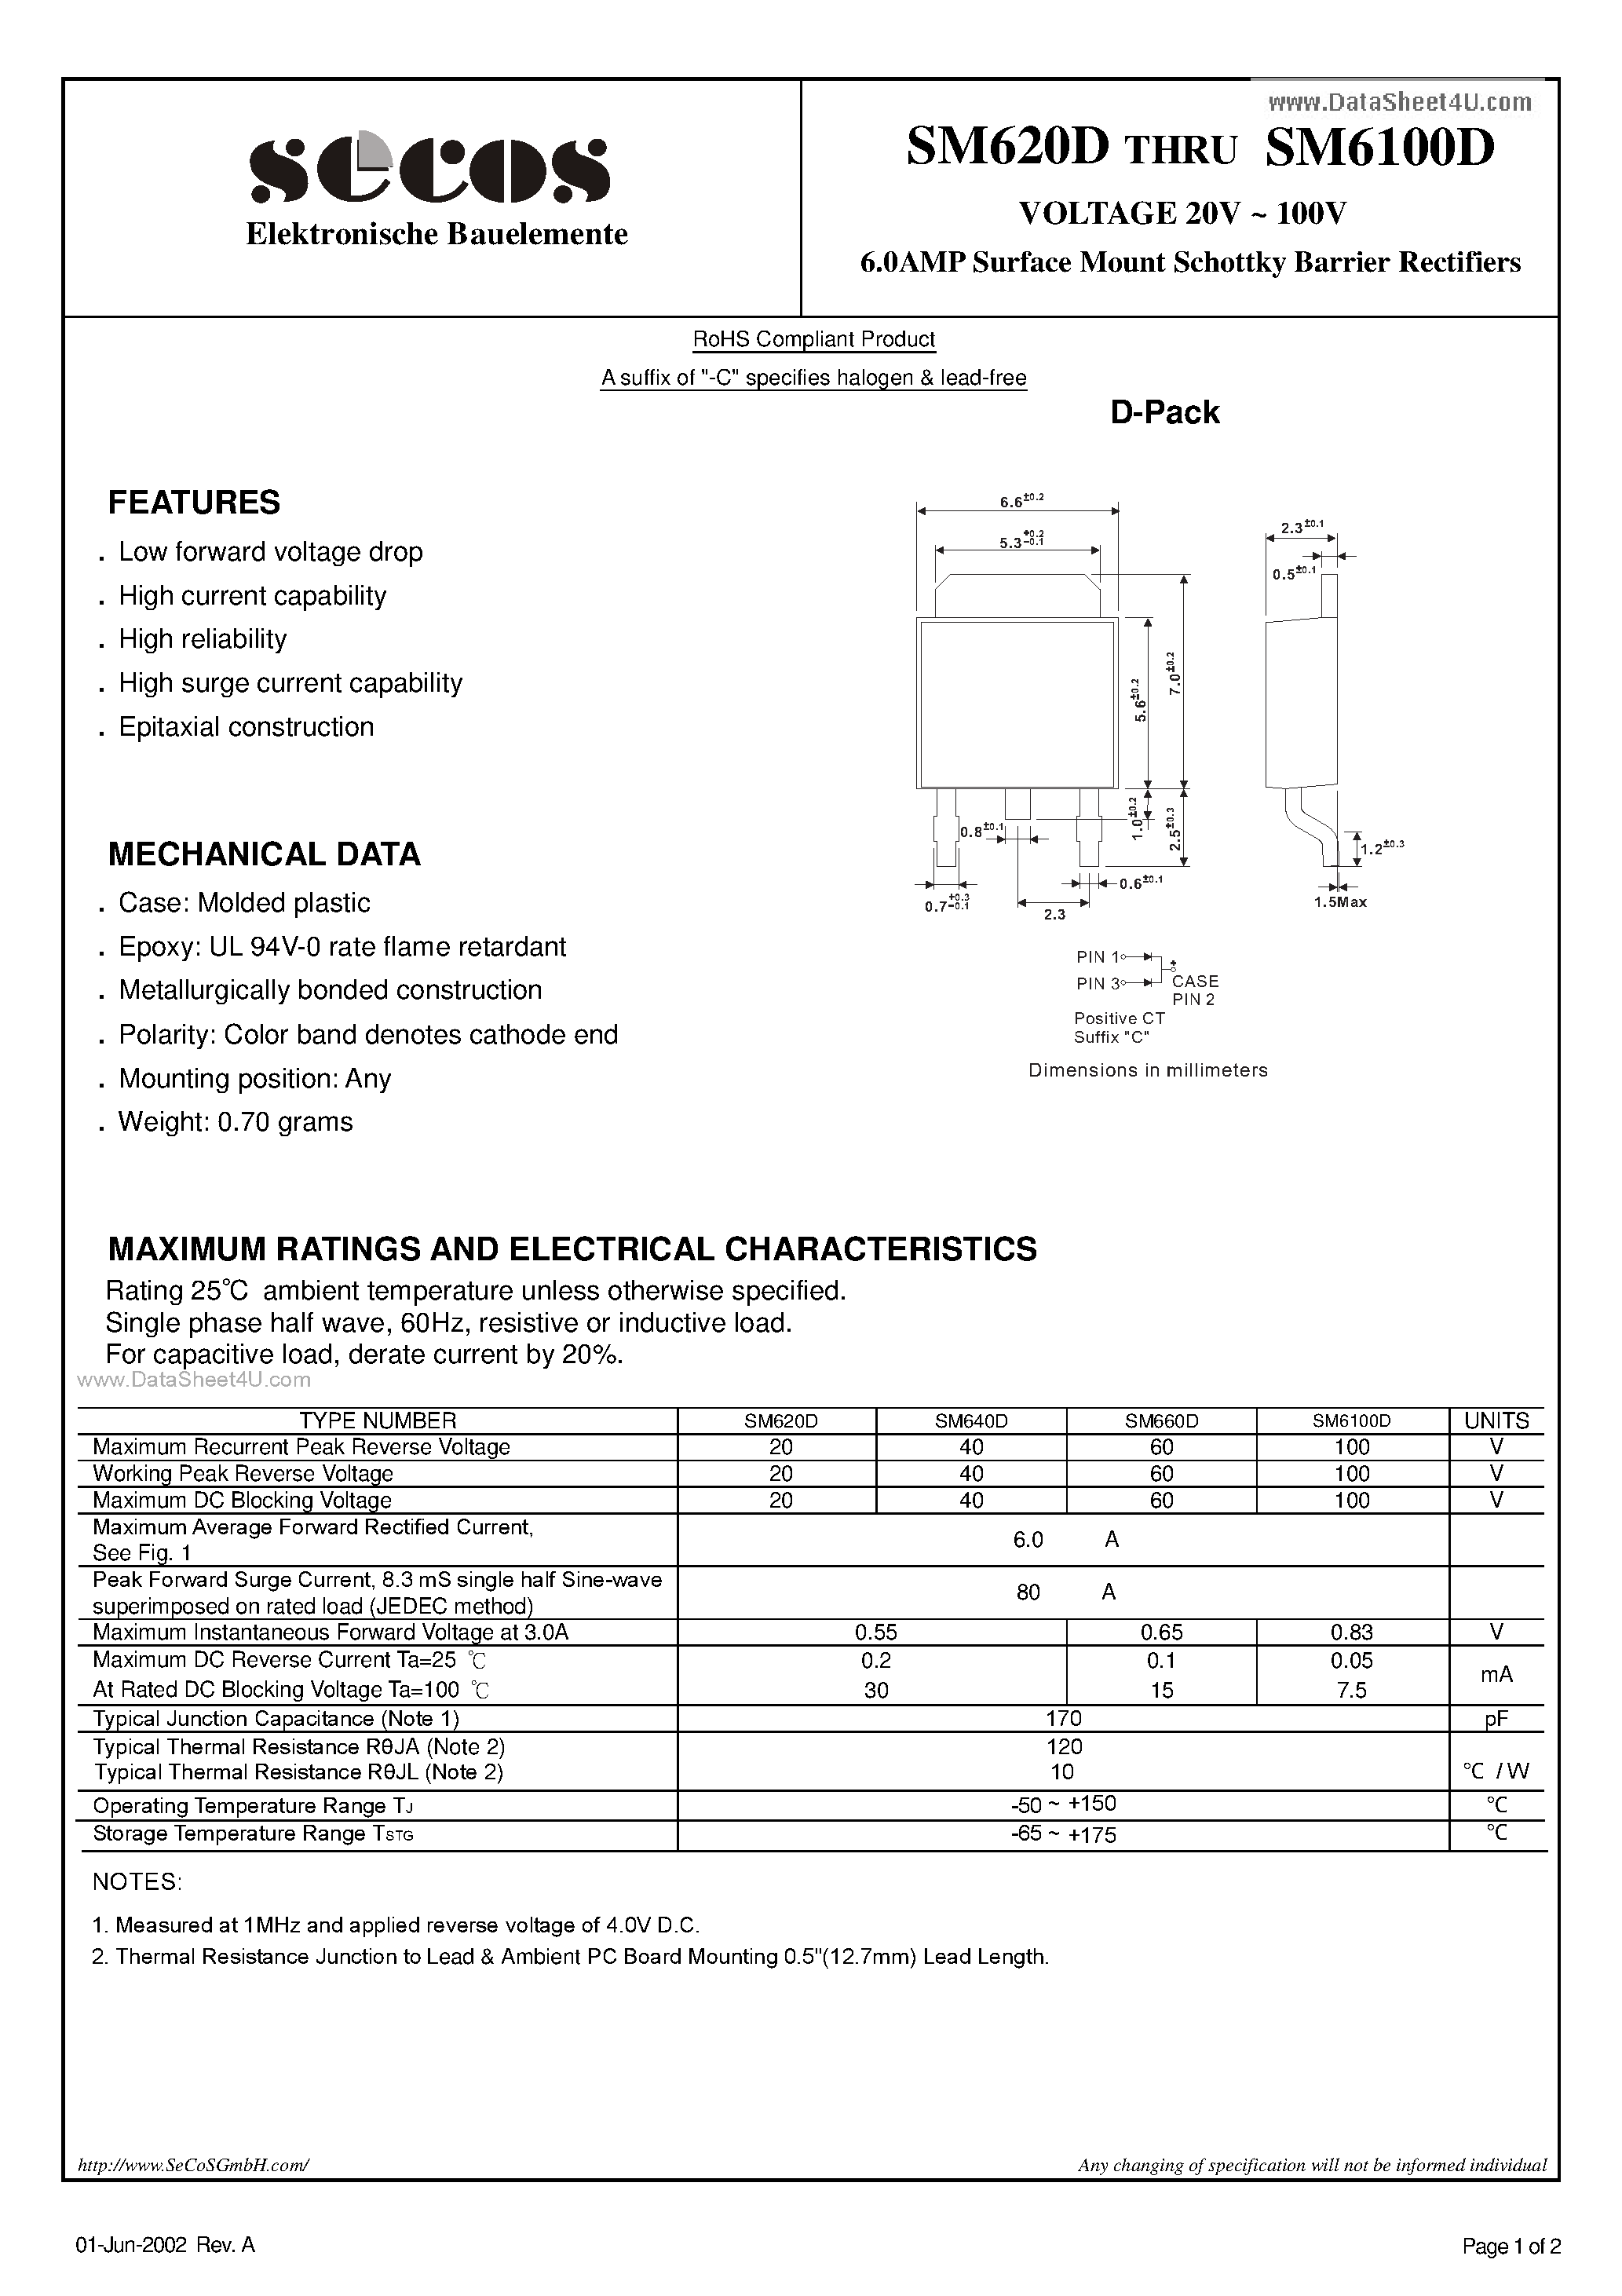 Datasheet SM6100D - (SM620D - SM6100D) 6.0AMP Surface Mount Schottky Barrier Rectifiers page 1